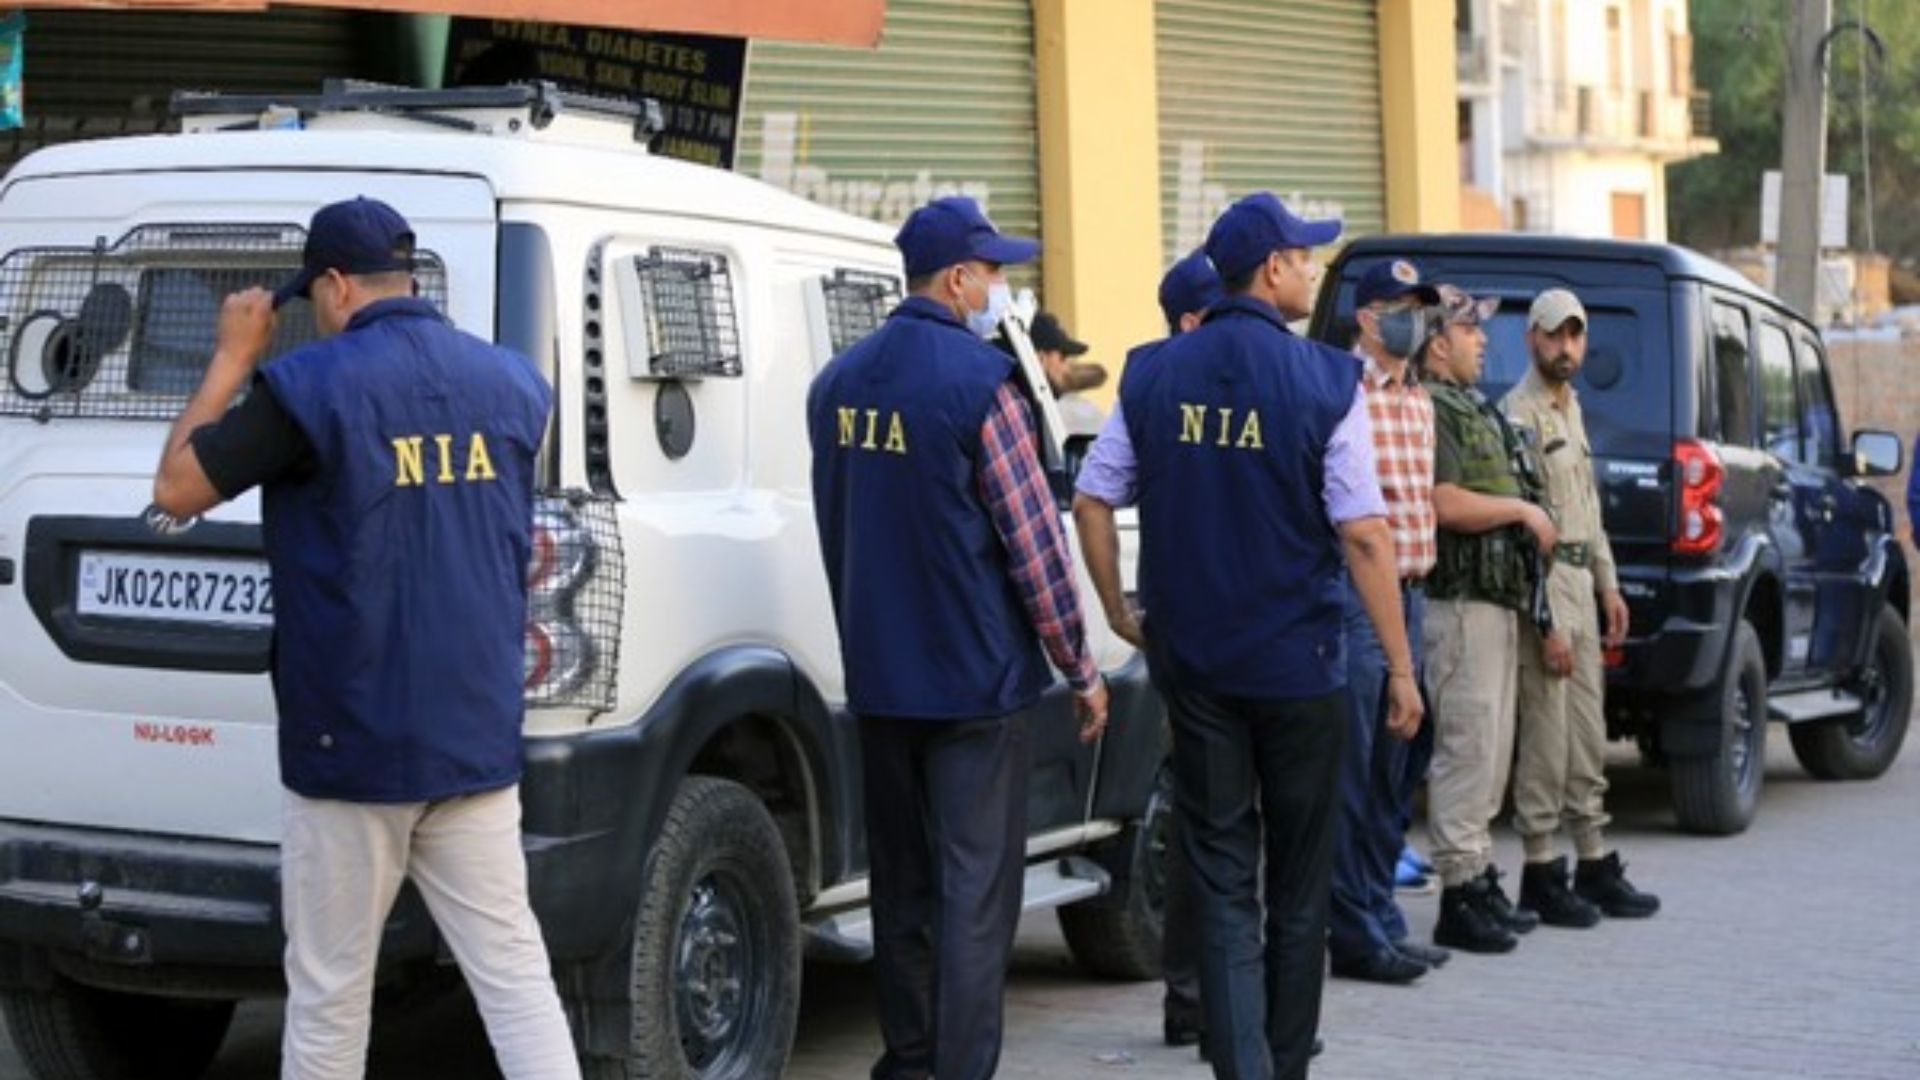 NIA Raids 16 Places in Khalistan-Linked Organized Crime Probe